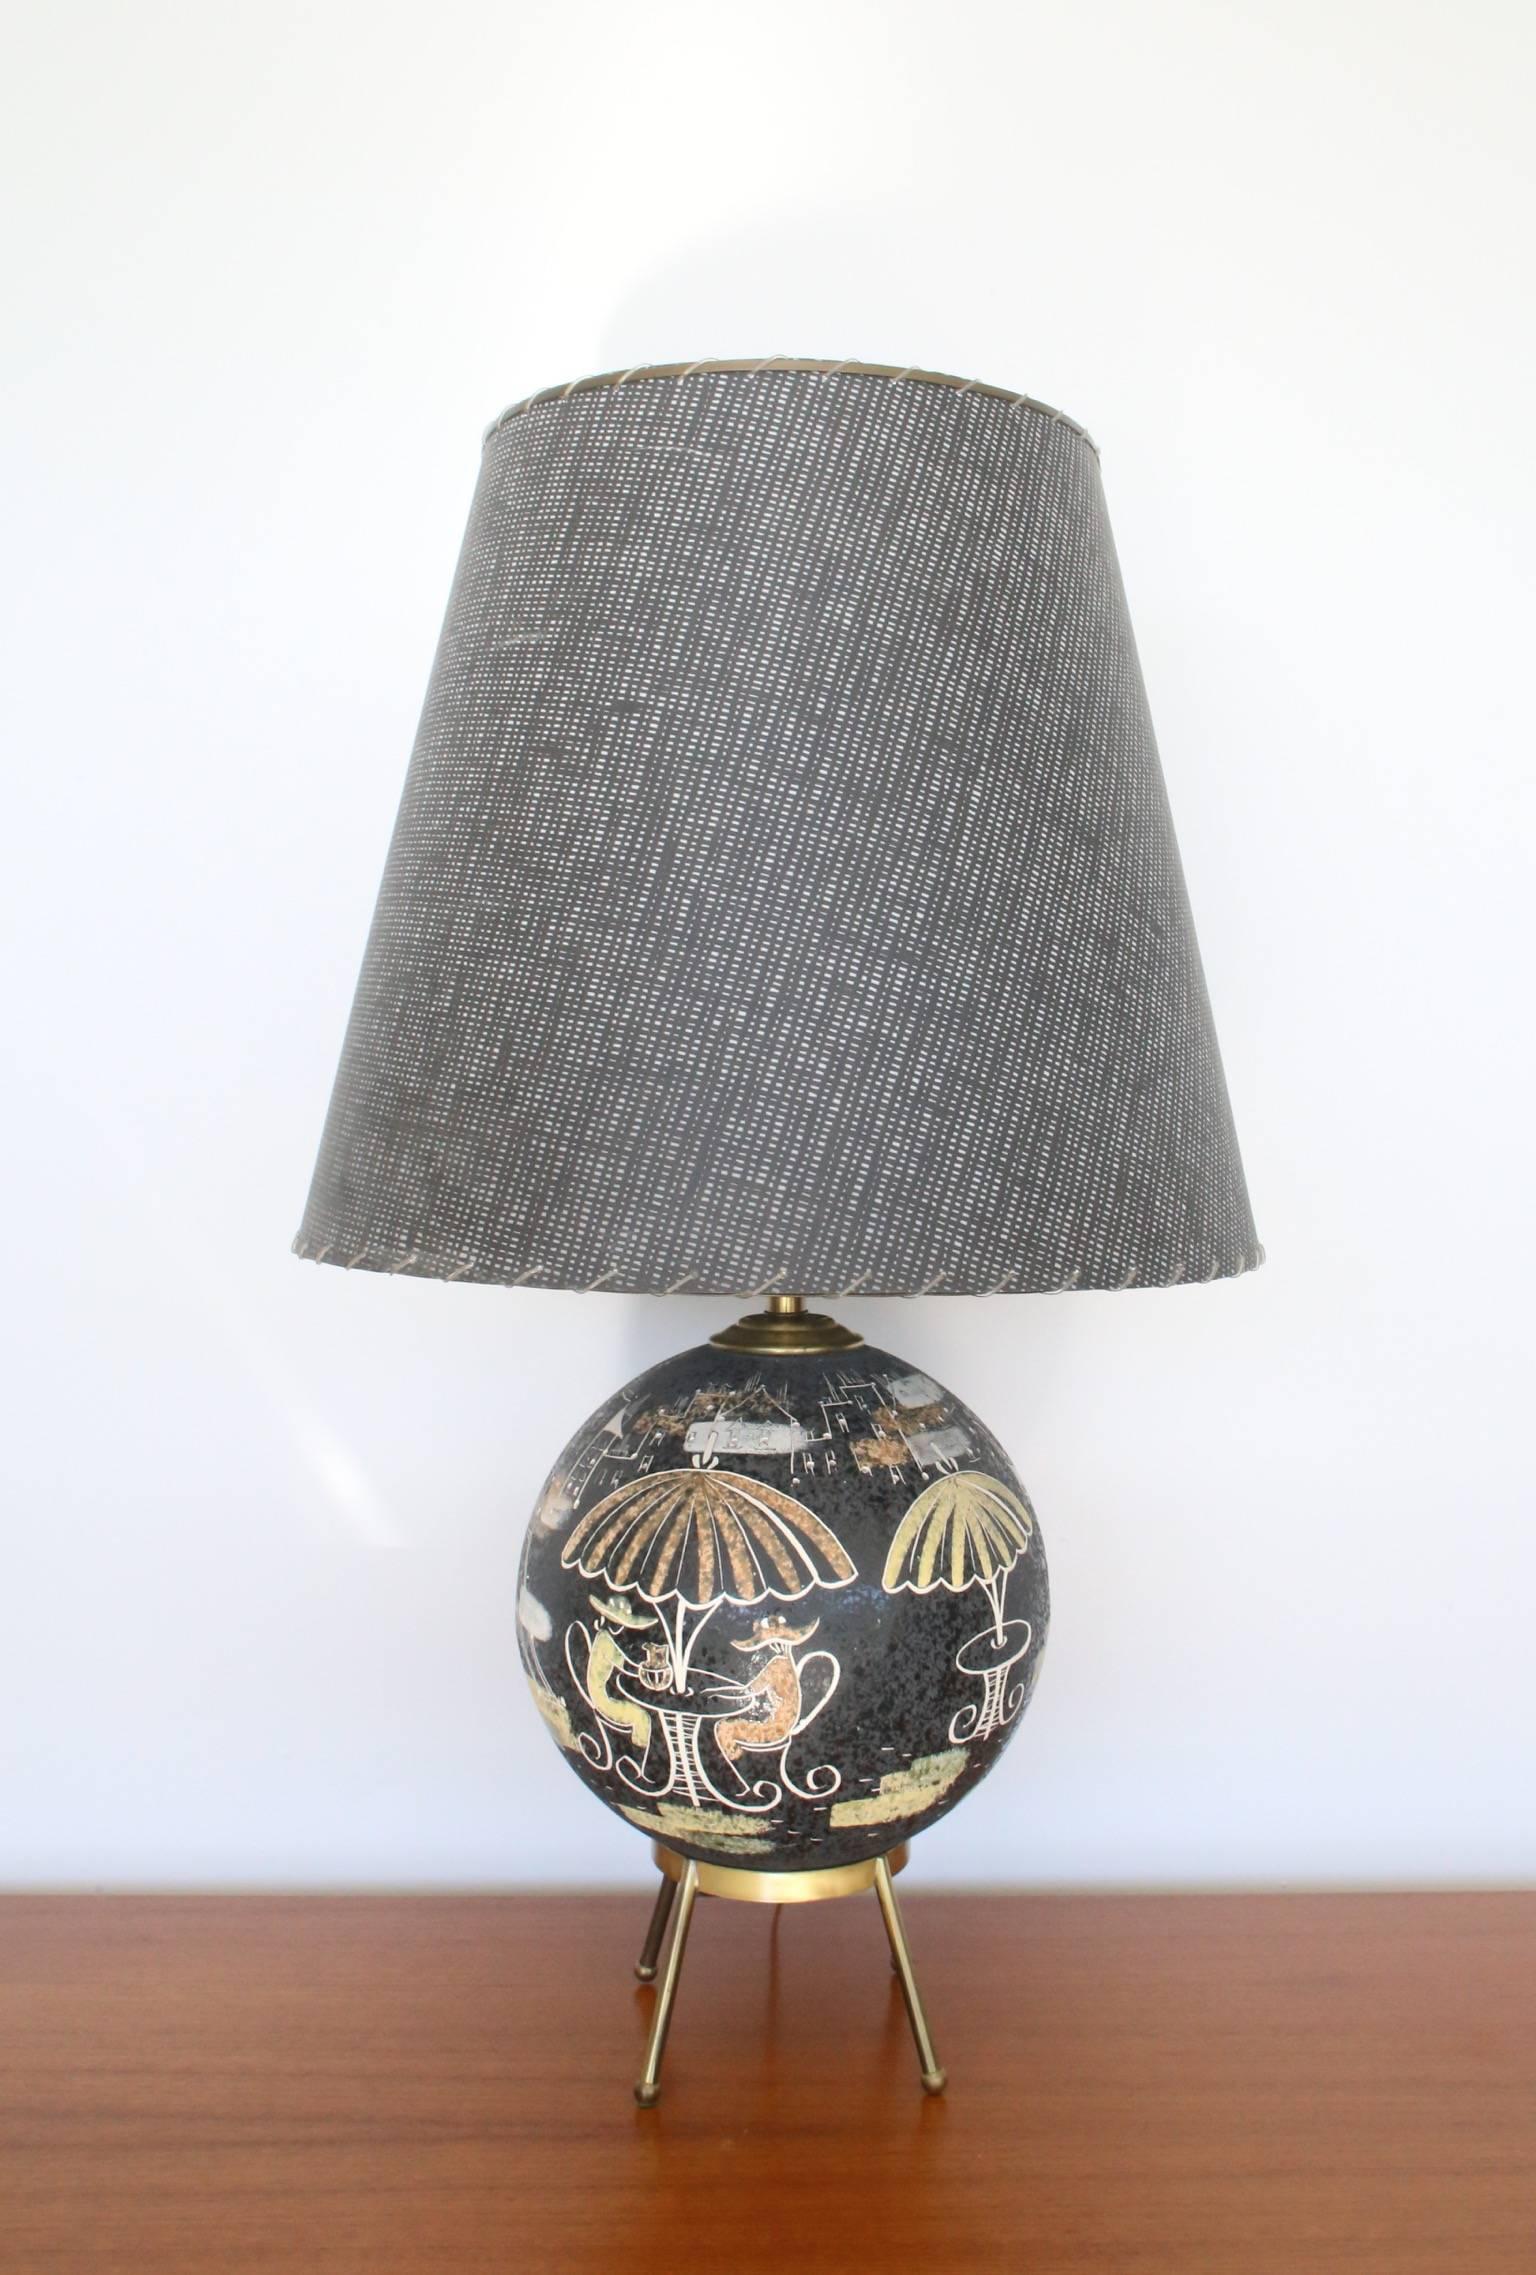 Mid-Century Modern Paris Scene Ceramic Spherical Table Lamp by Tye of California